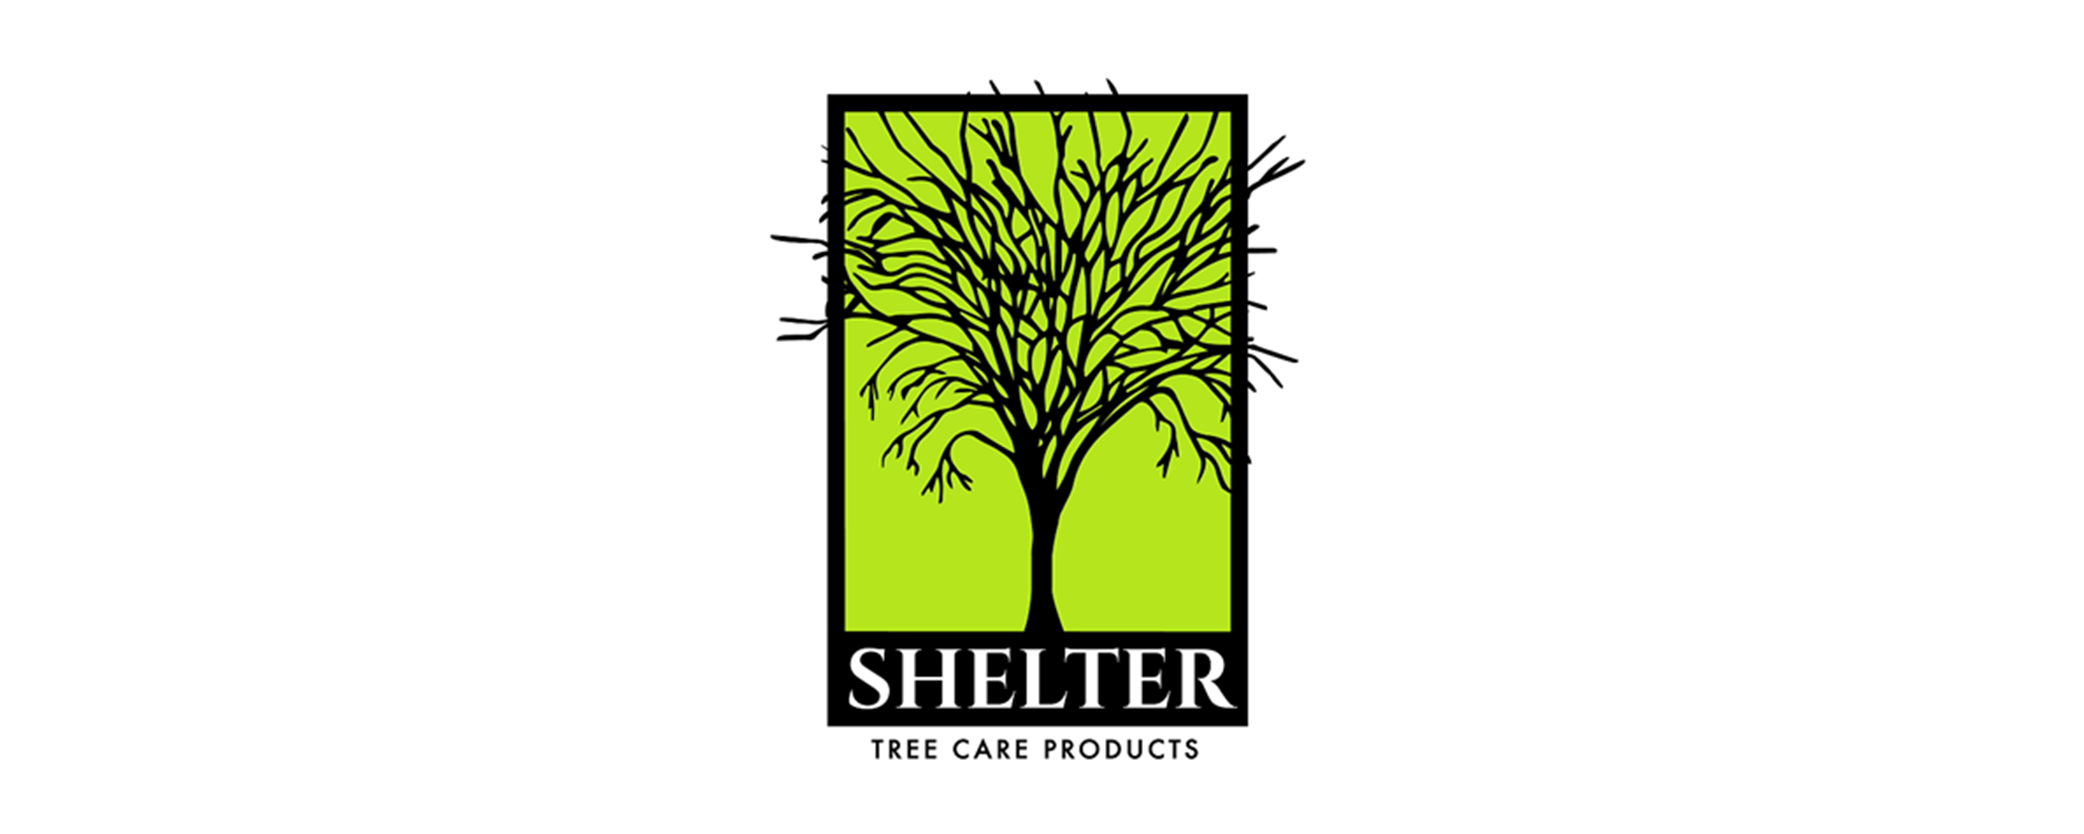 Sheltertree